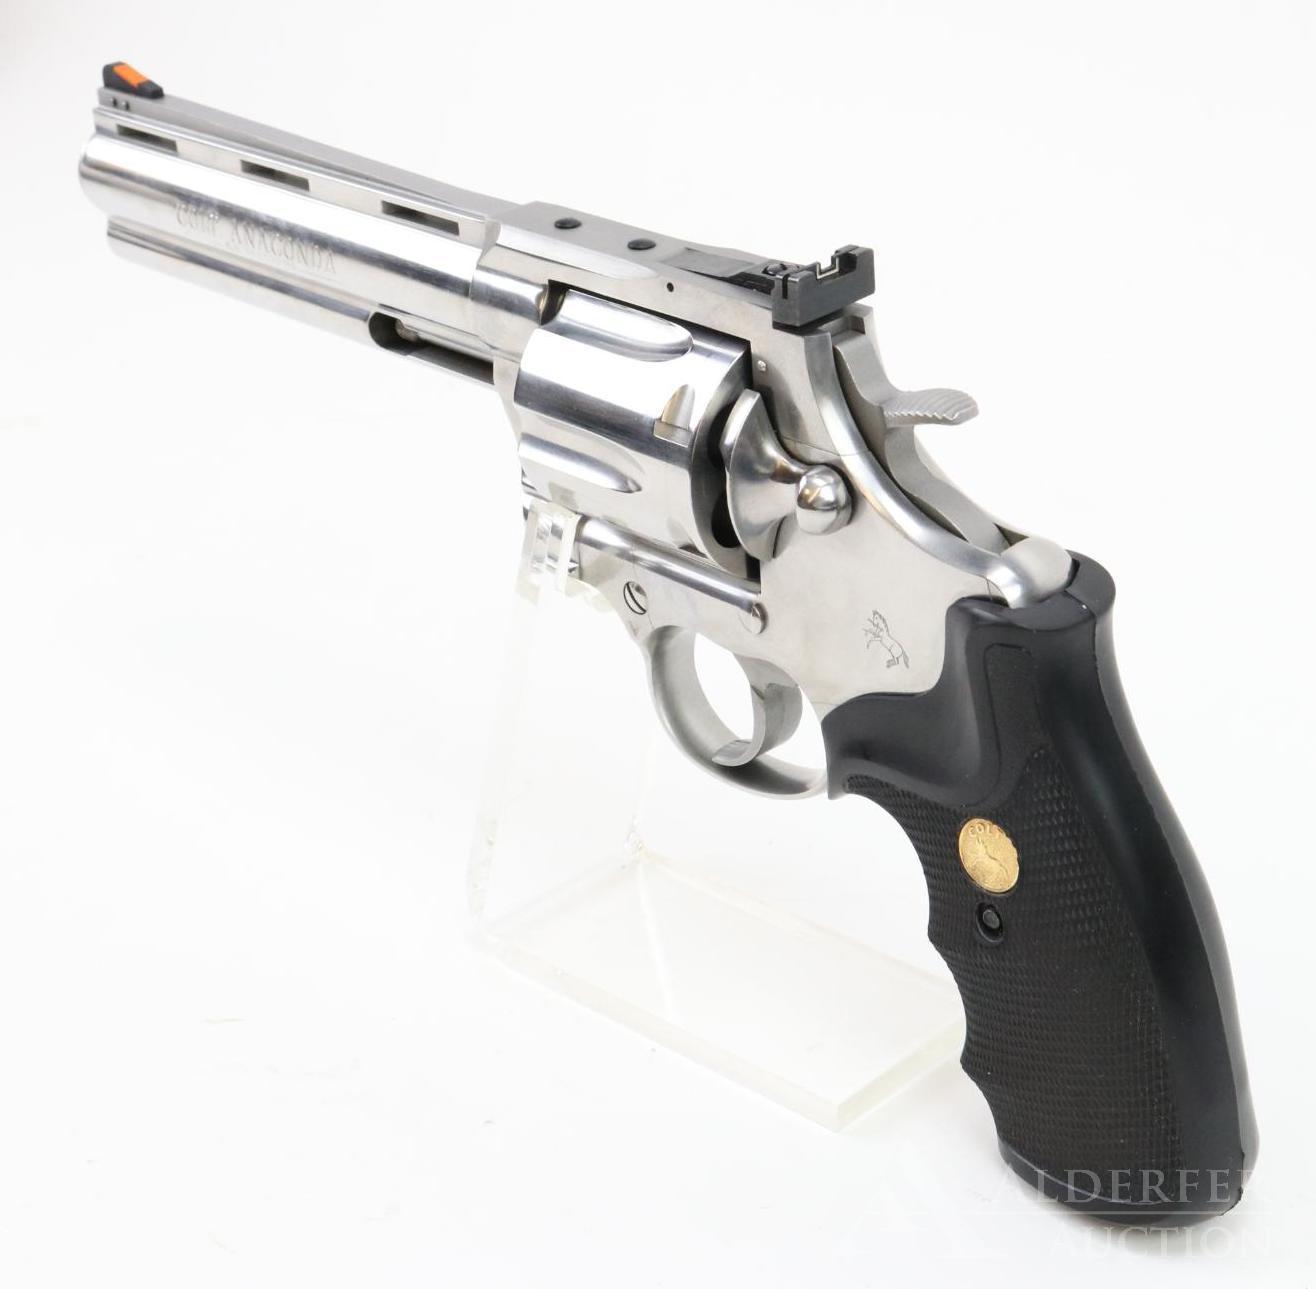 Colt Anaconda double action revolver.